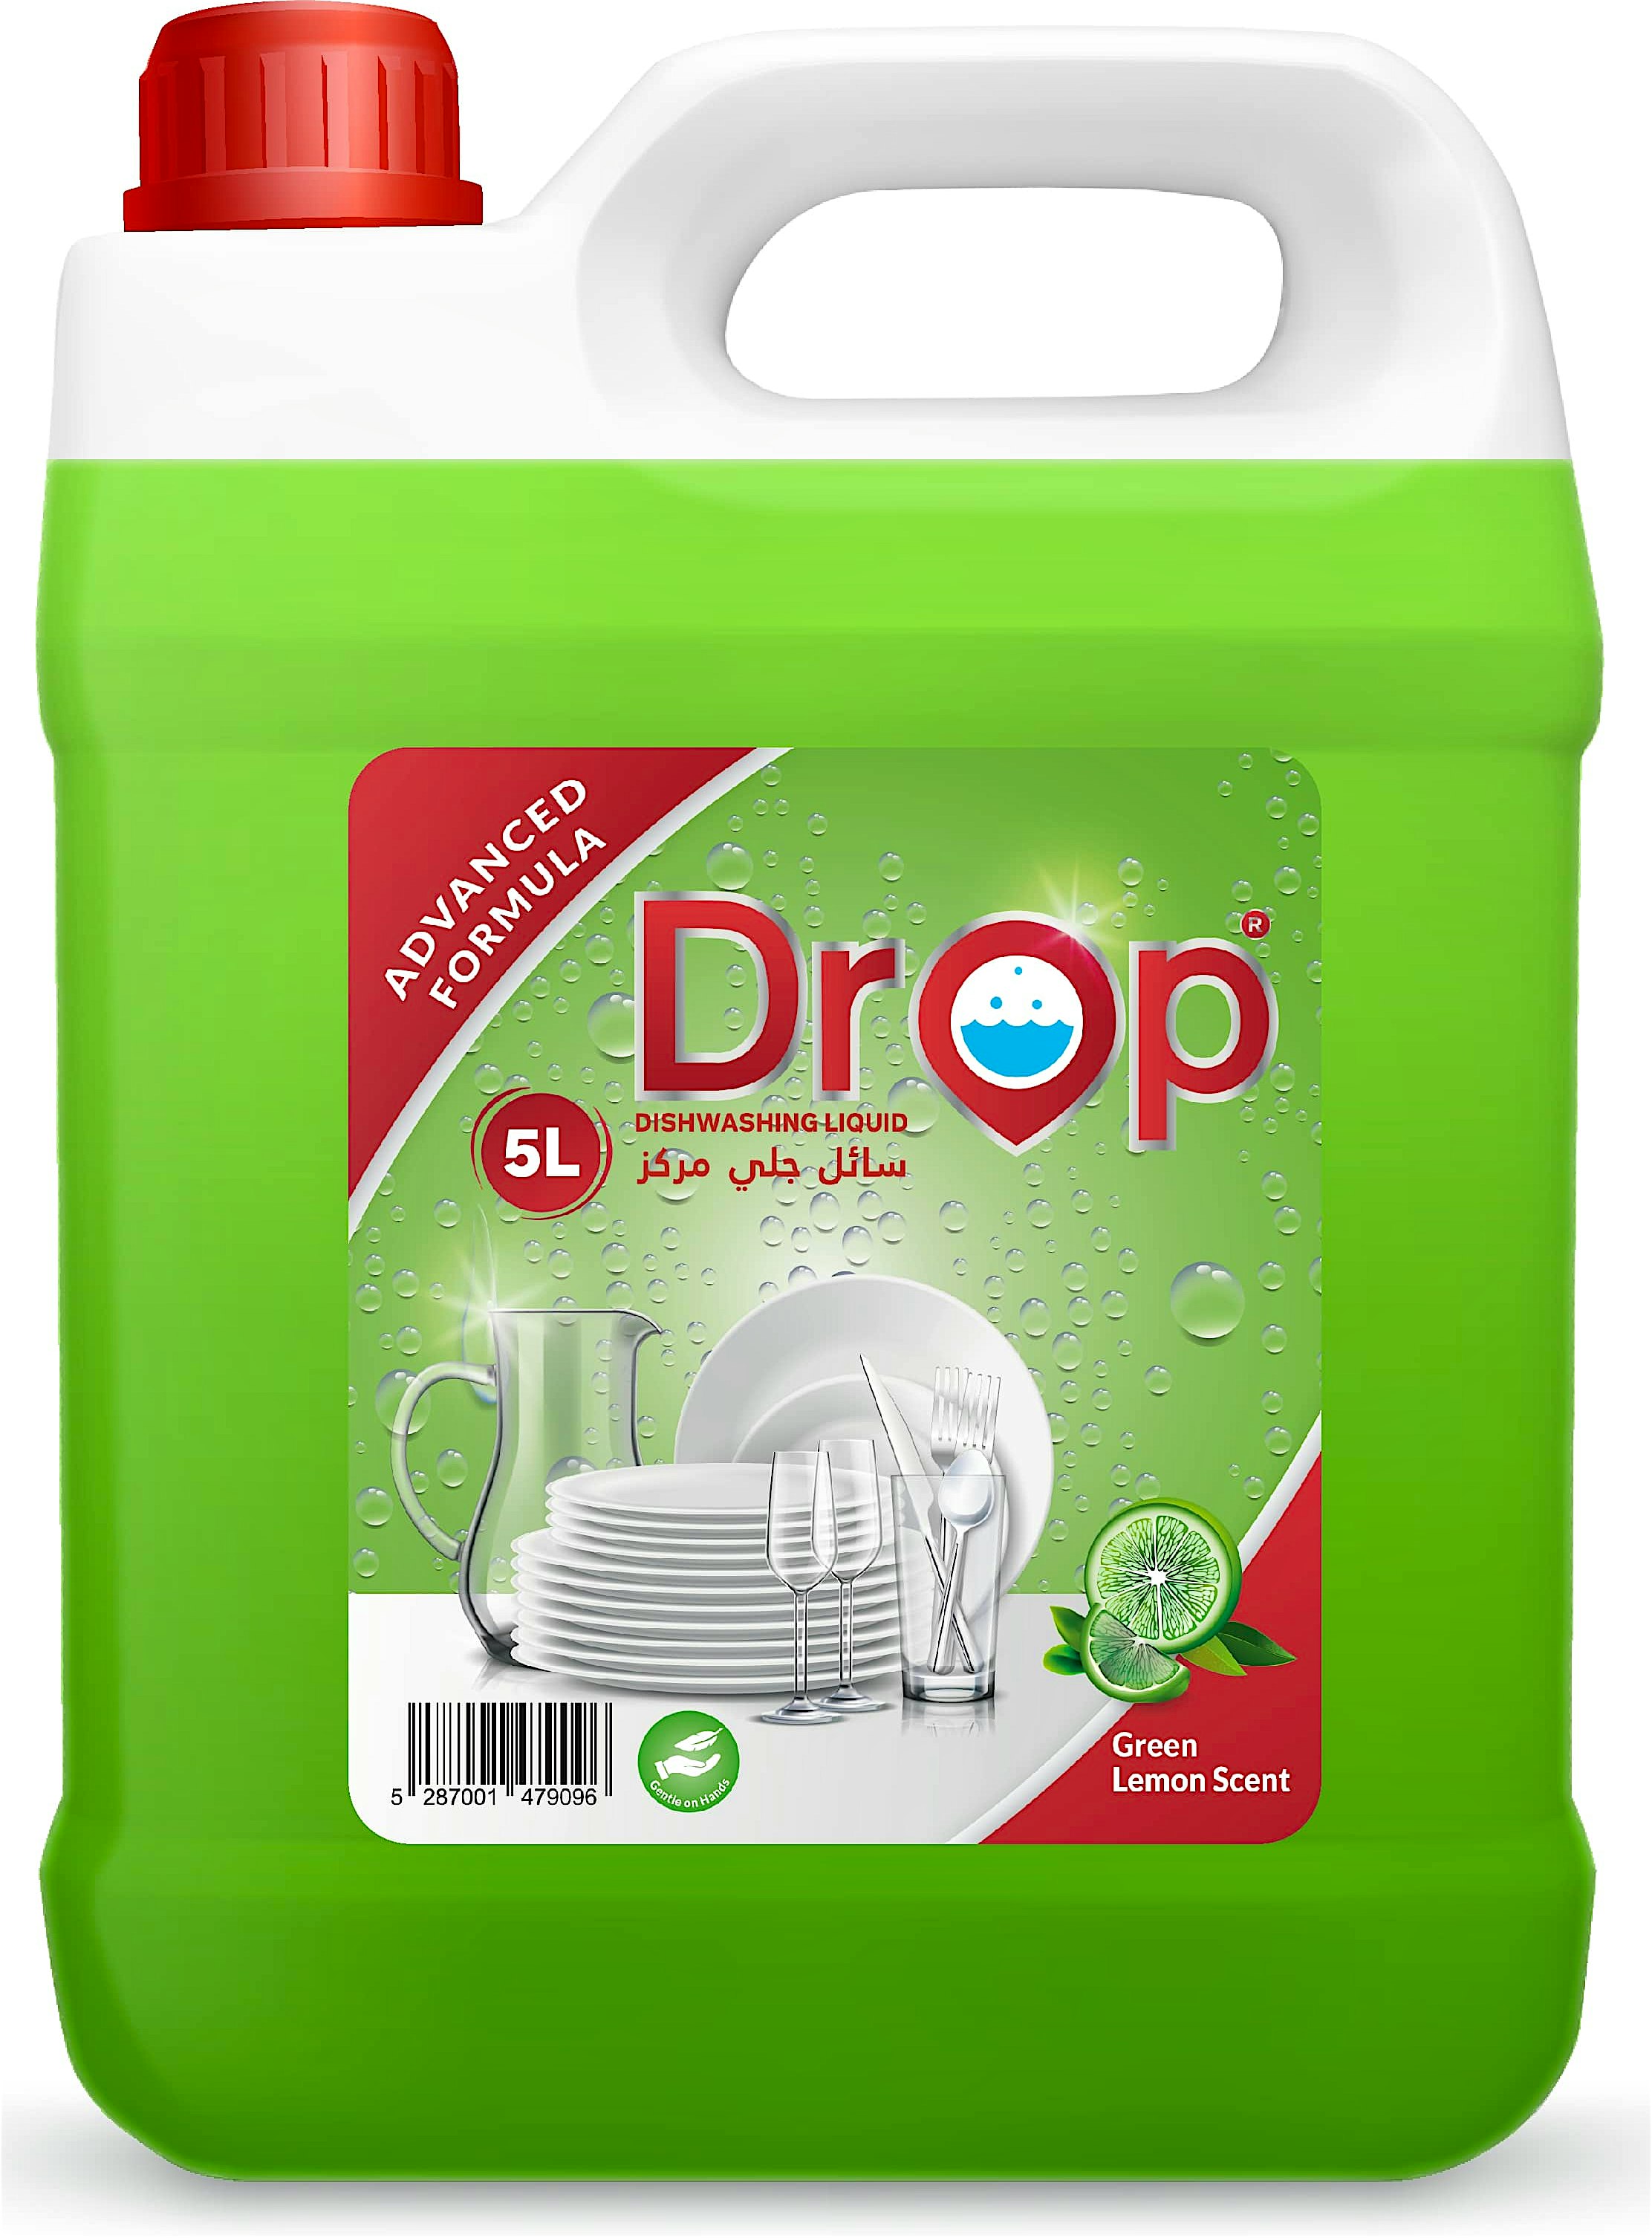 Drop Dishwashing Liquid Green Lemon Scent 5 L